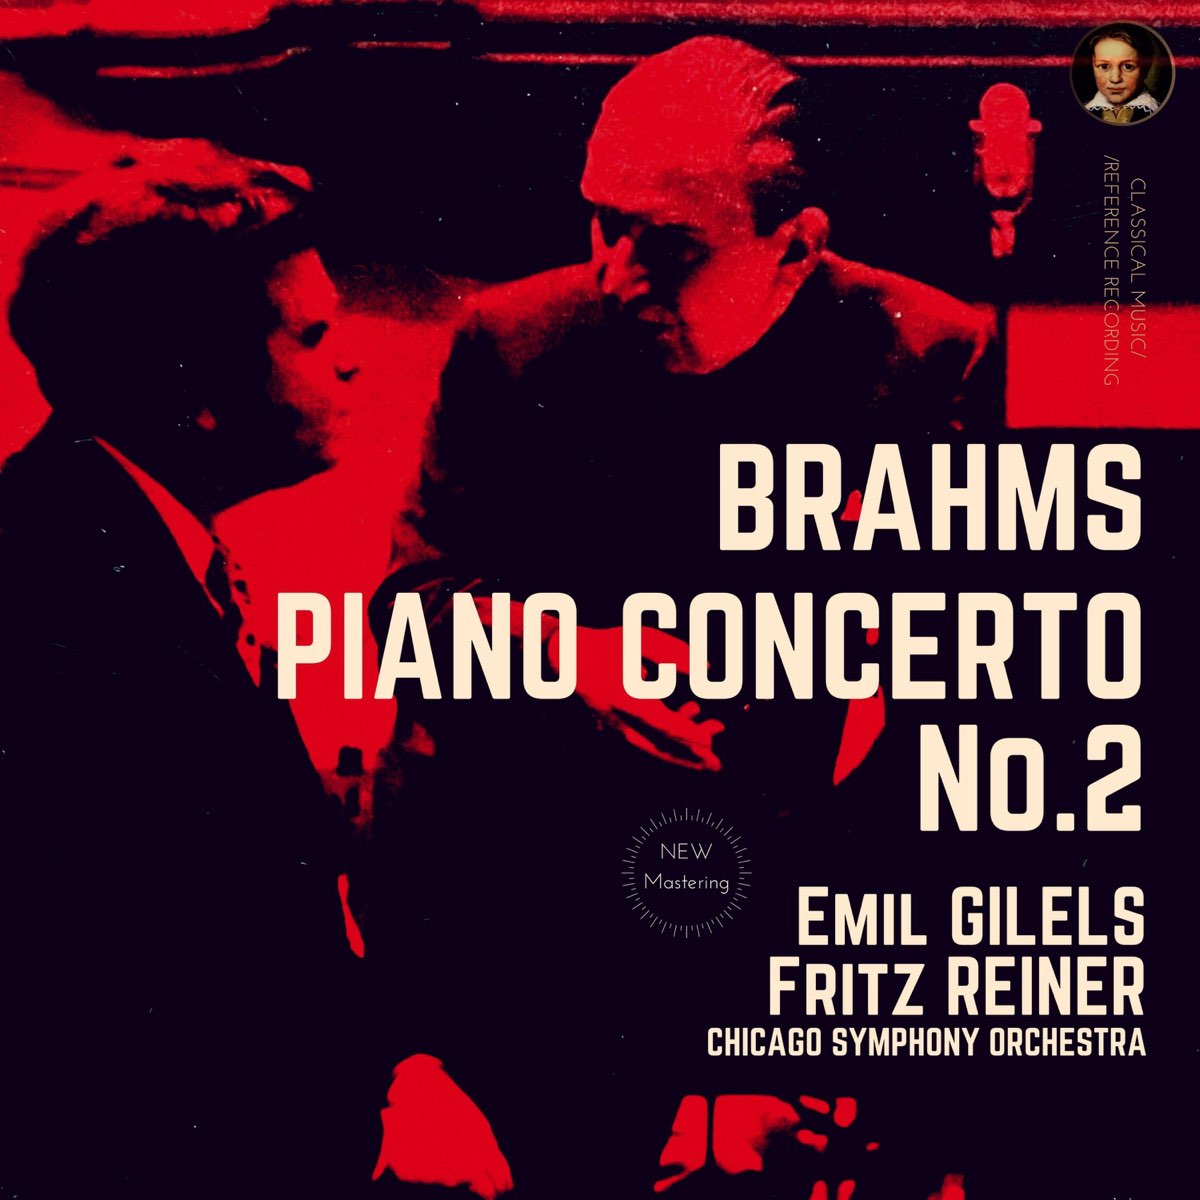 Brahms: Piano Concerto No. 2 - Album by Emil Gilels & Fritz Reiner - Apple  Music